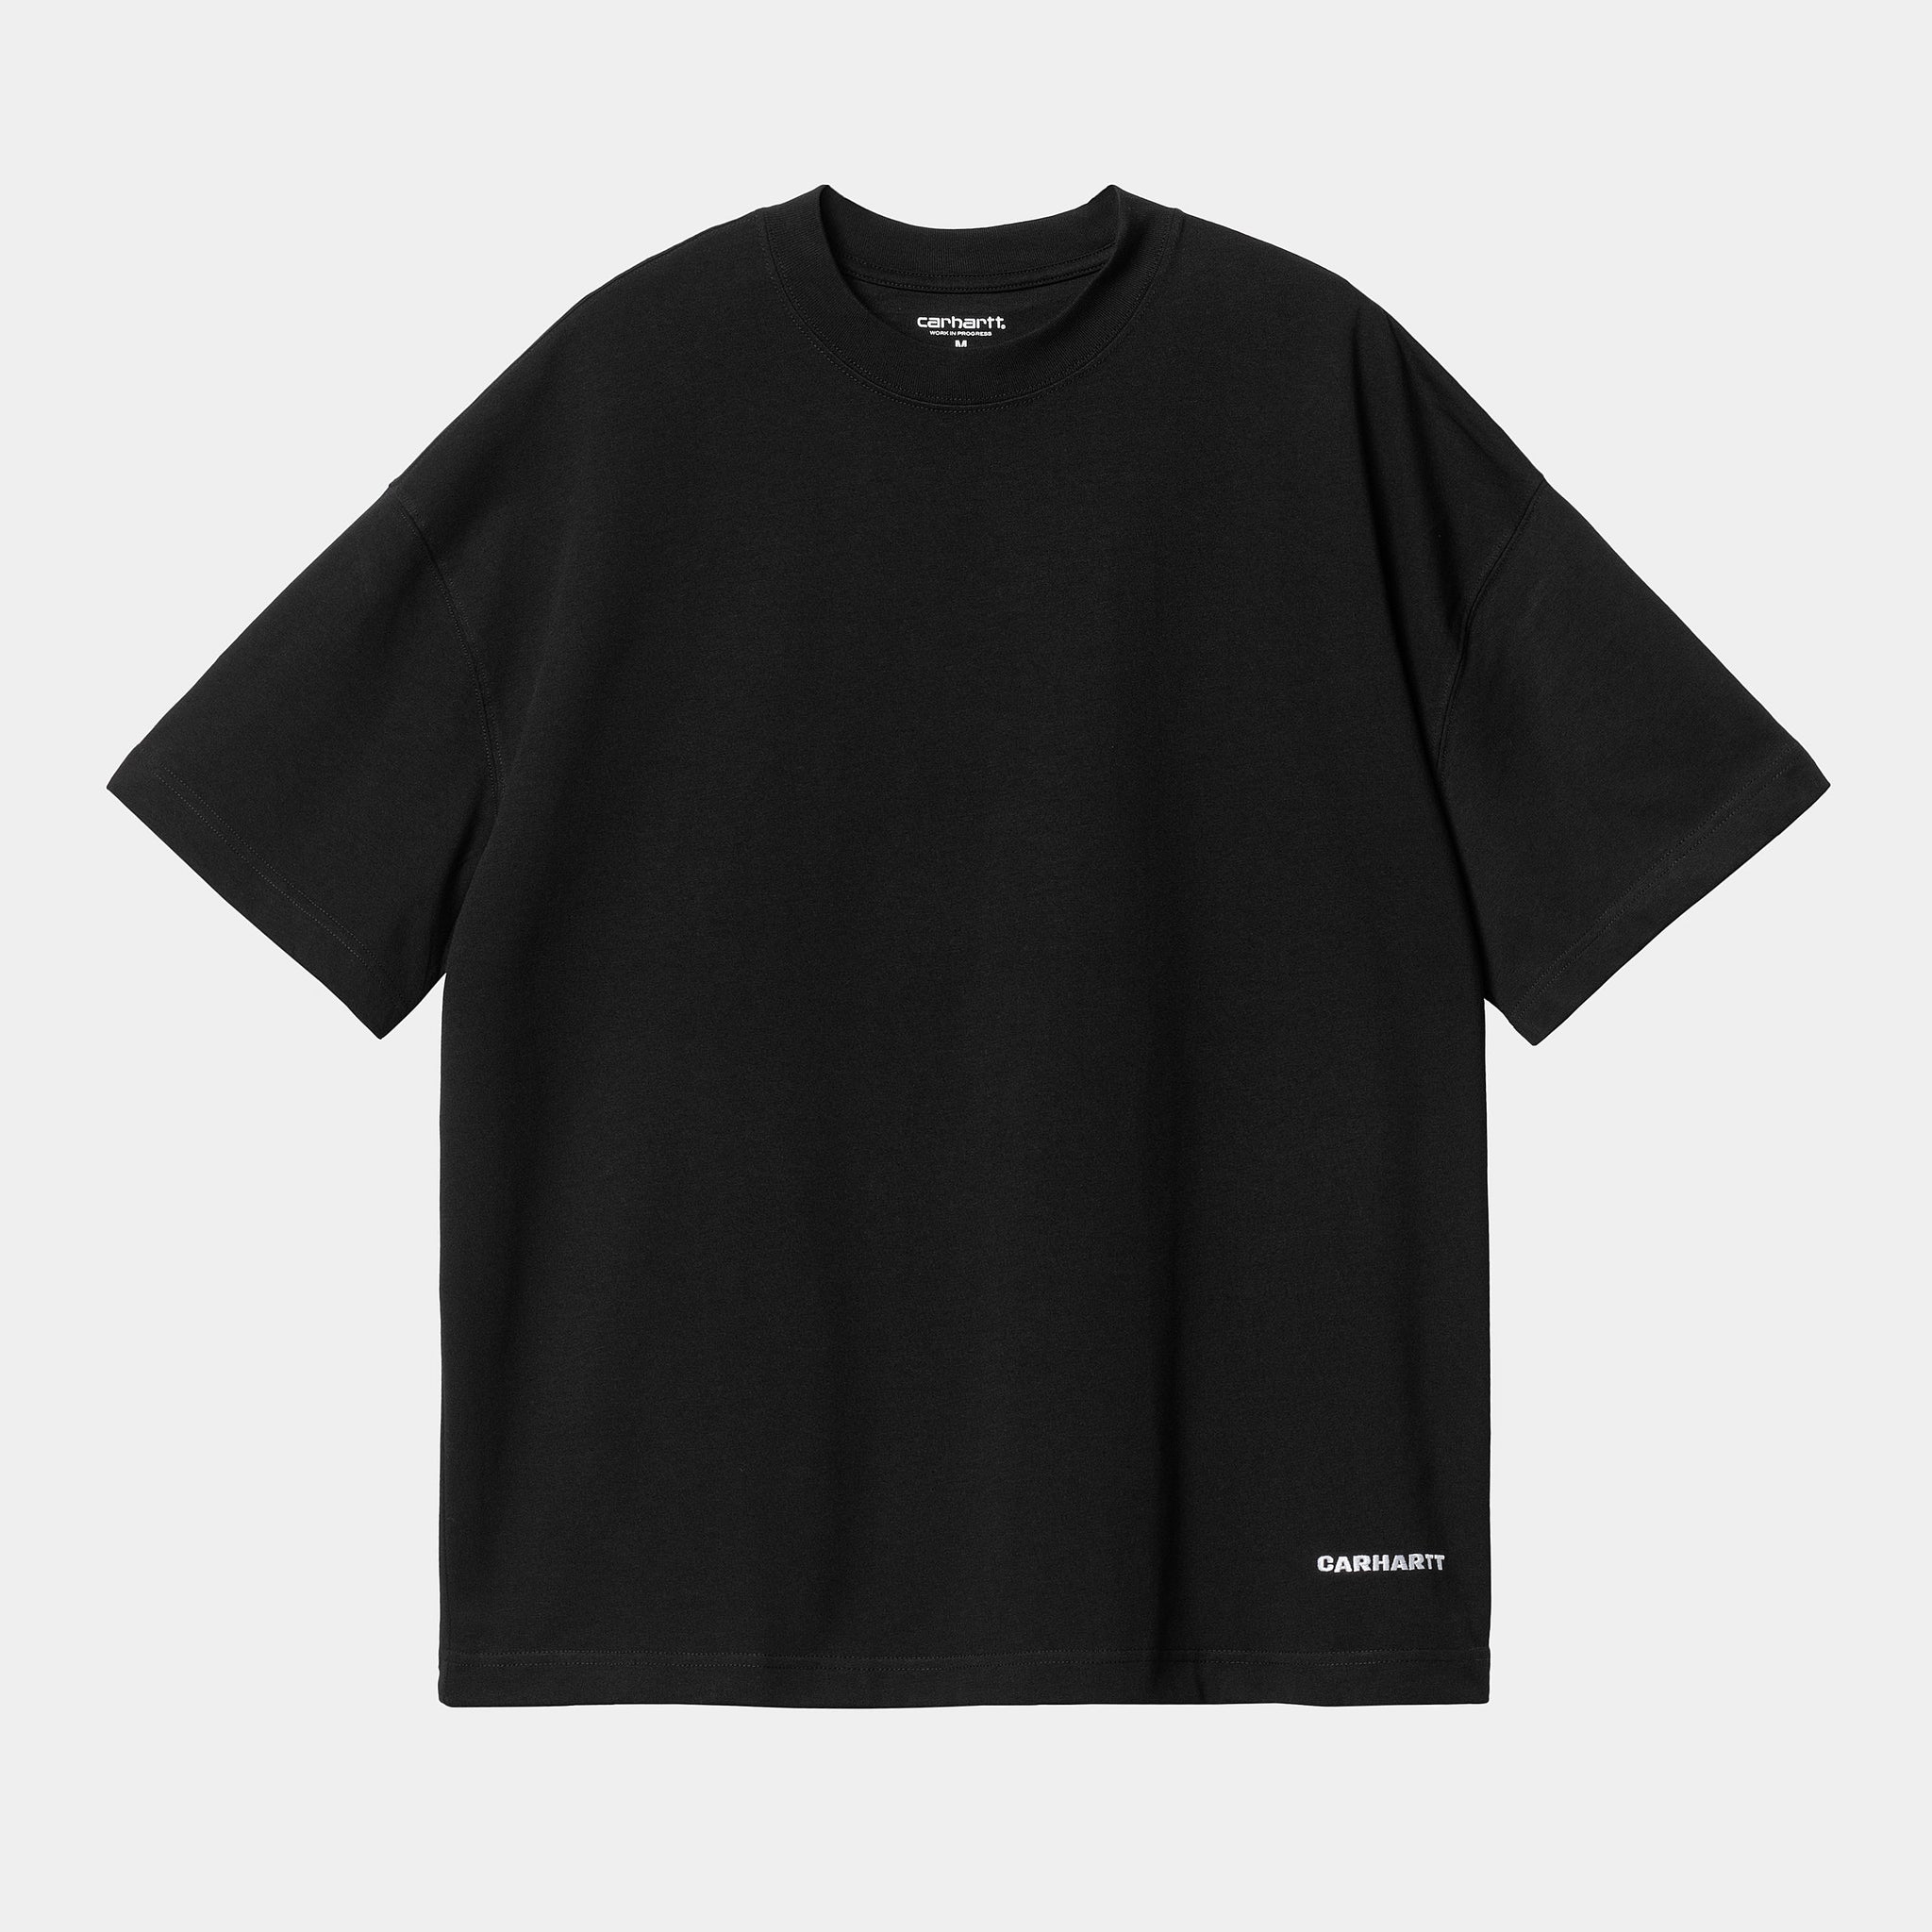 S/s Link Script T-shirt 100% Organic Cotton Single Jersey, 230 G/m² (Black / White)